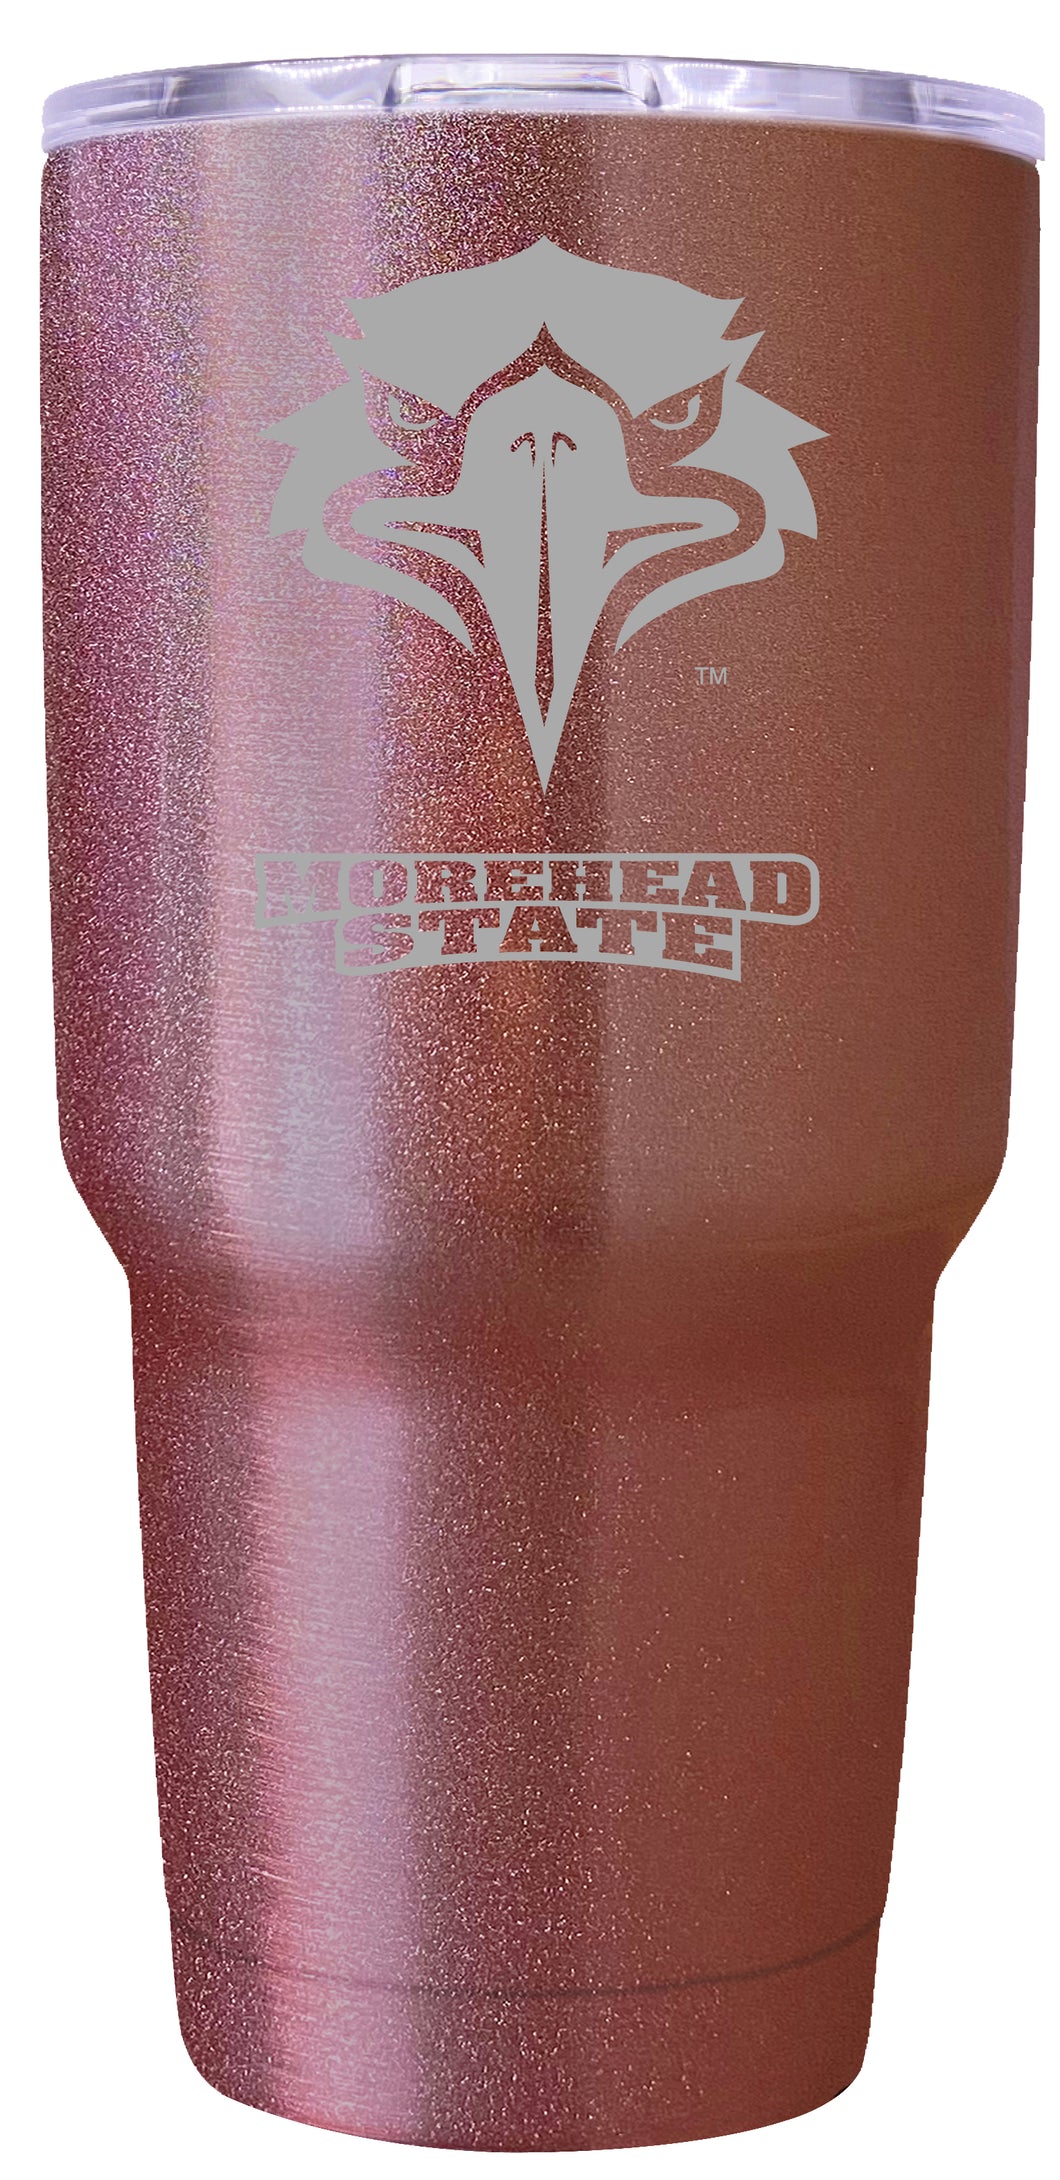 Morehead State University Premium Laser Engraved Tumbler - 24oz Stainless Steel Insulated Mug Rose Gold